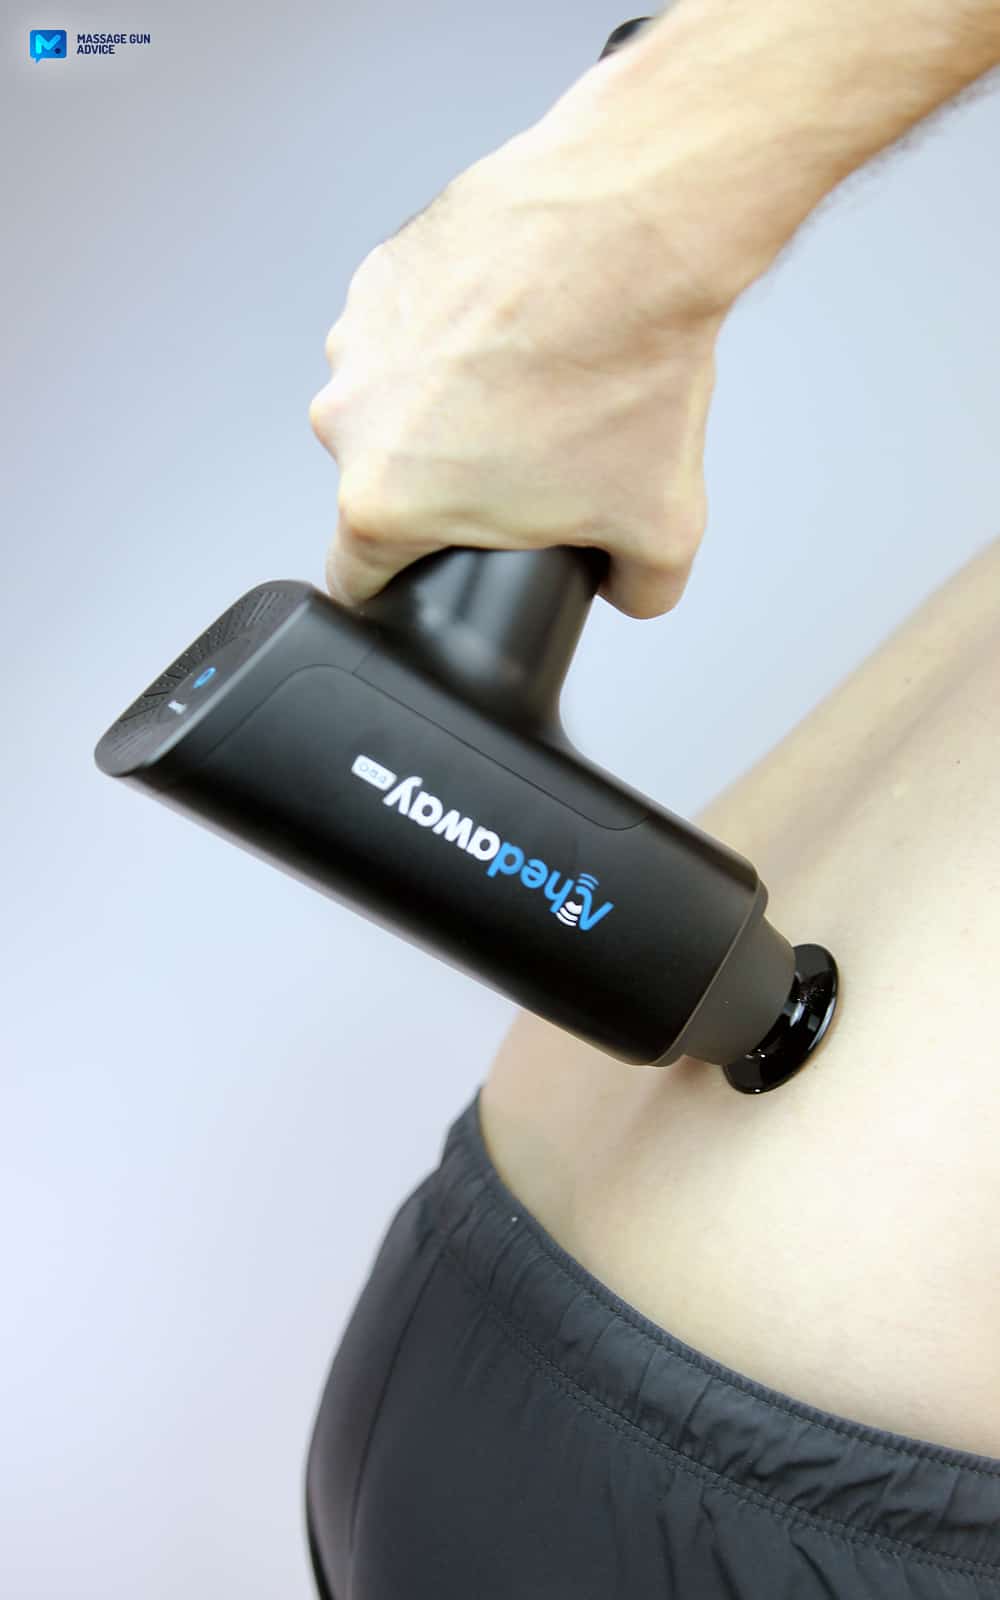 Use Massage Gun To Help With Sciatica Nerve Pain